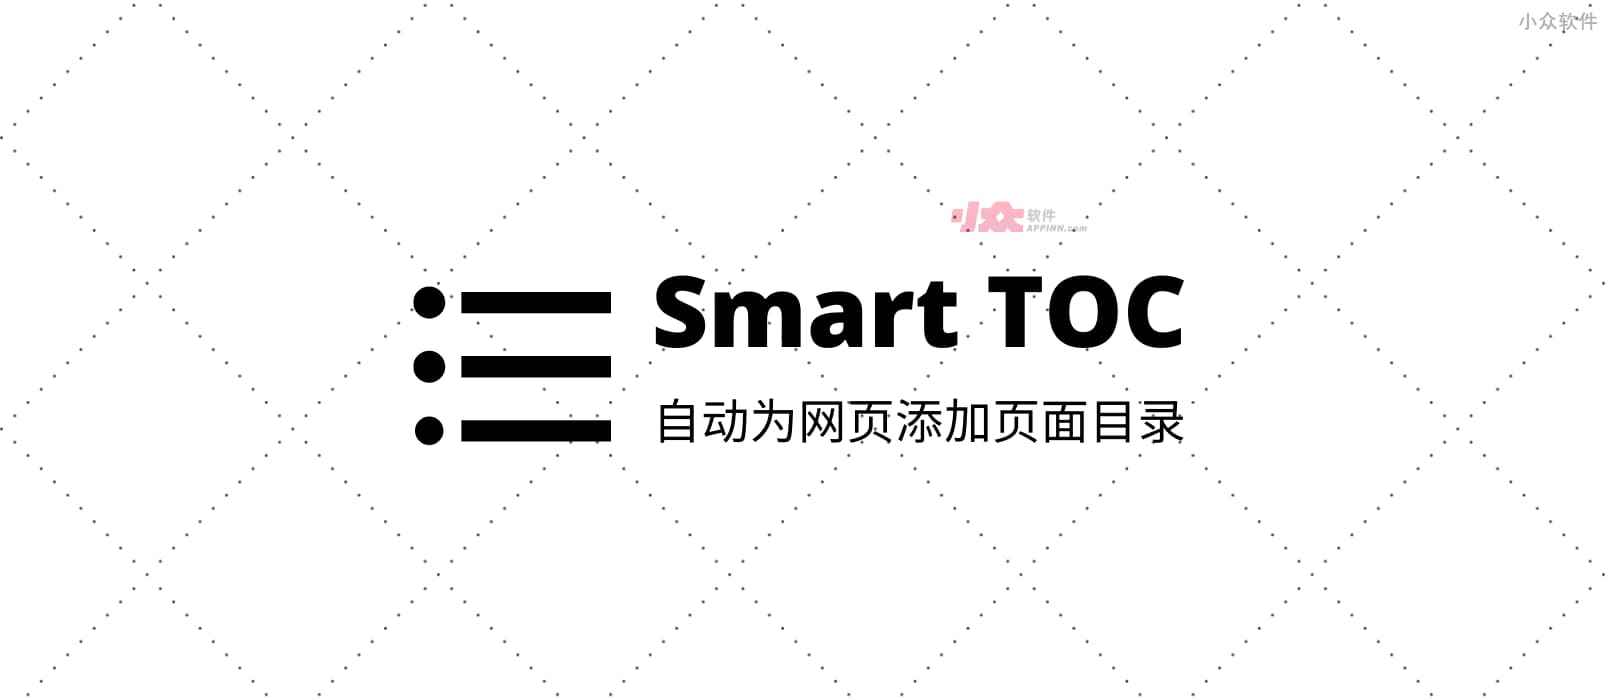 Smart TOC - 生成「智能网页大纲」，自动为 Chrome 添加页面目录